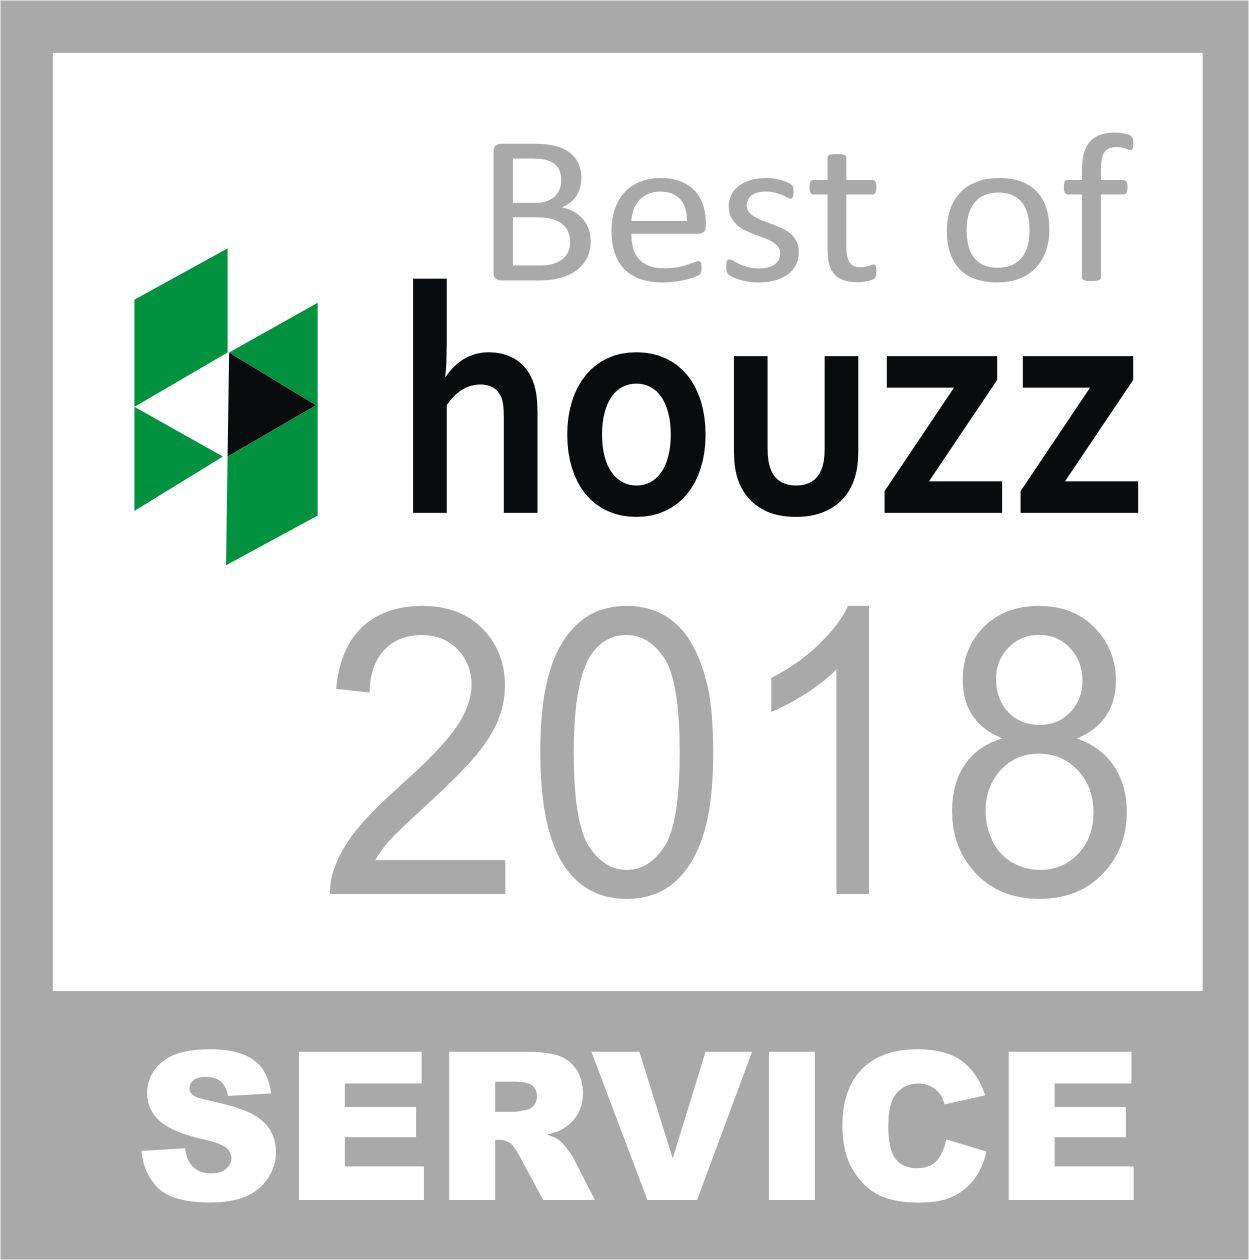 Houzz Small Logo - DeSantis Landscapes of Salem, OR Awarded Best Of Houzz 2018 ...